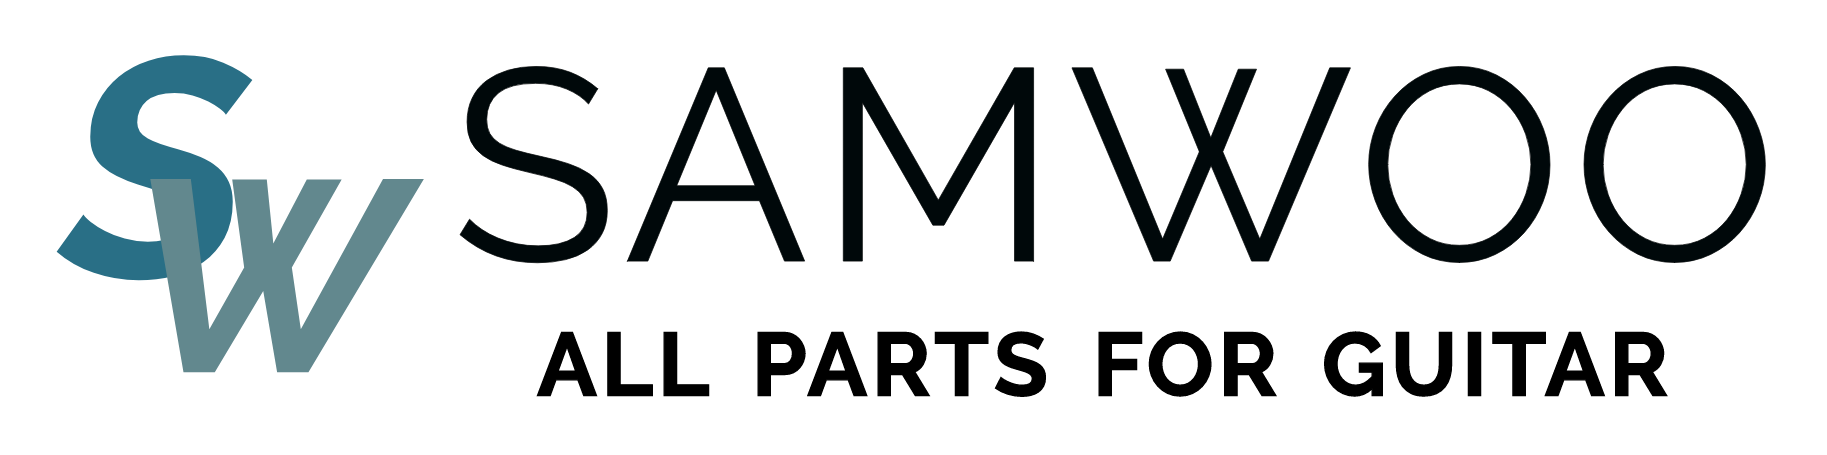 swmusic logo